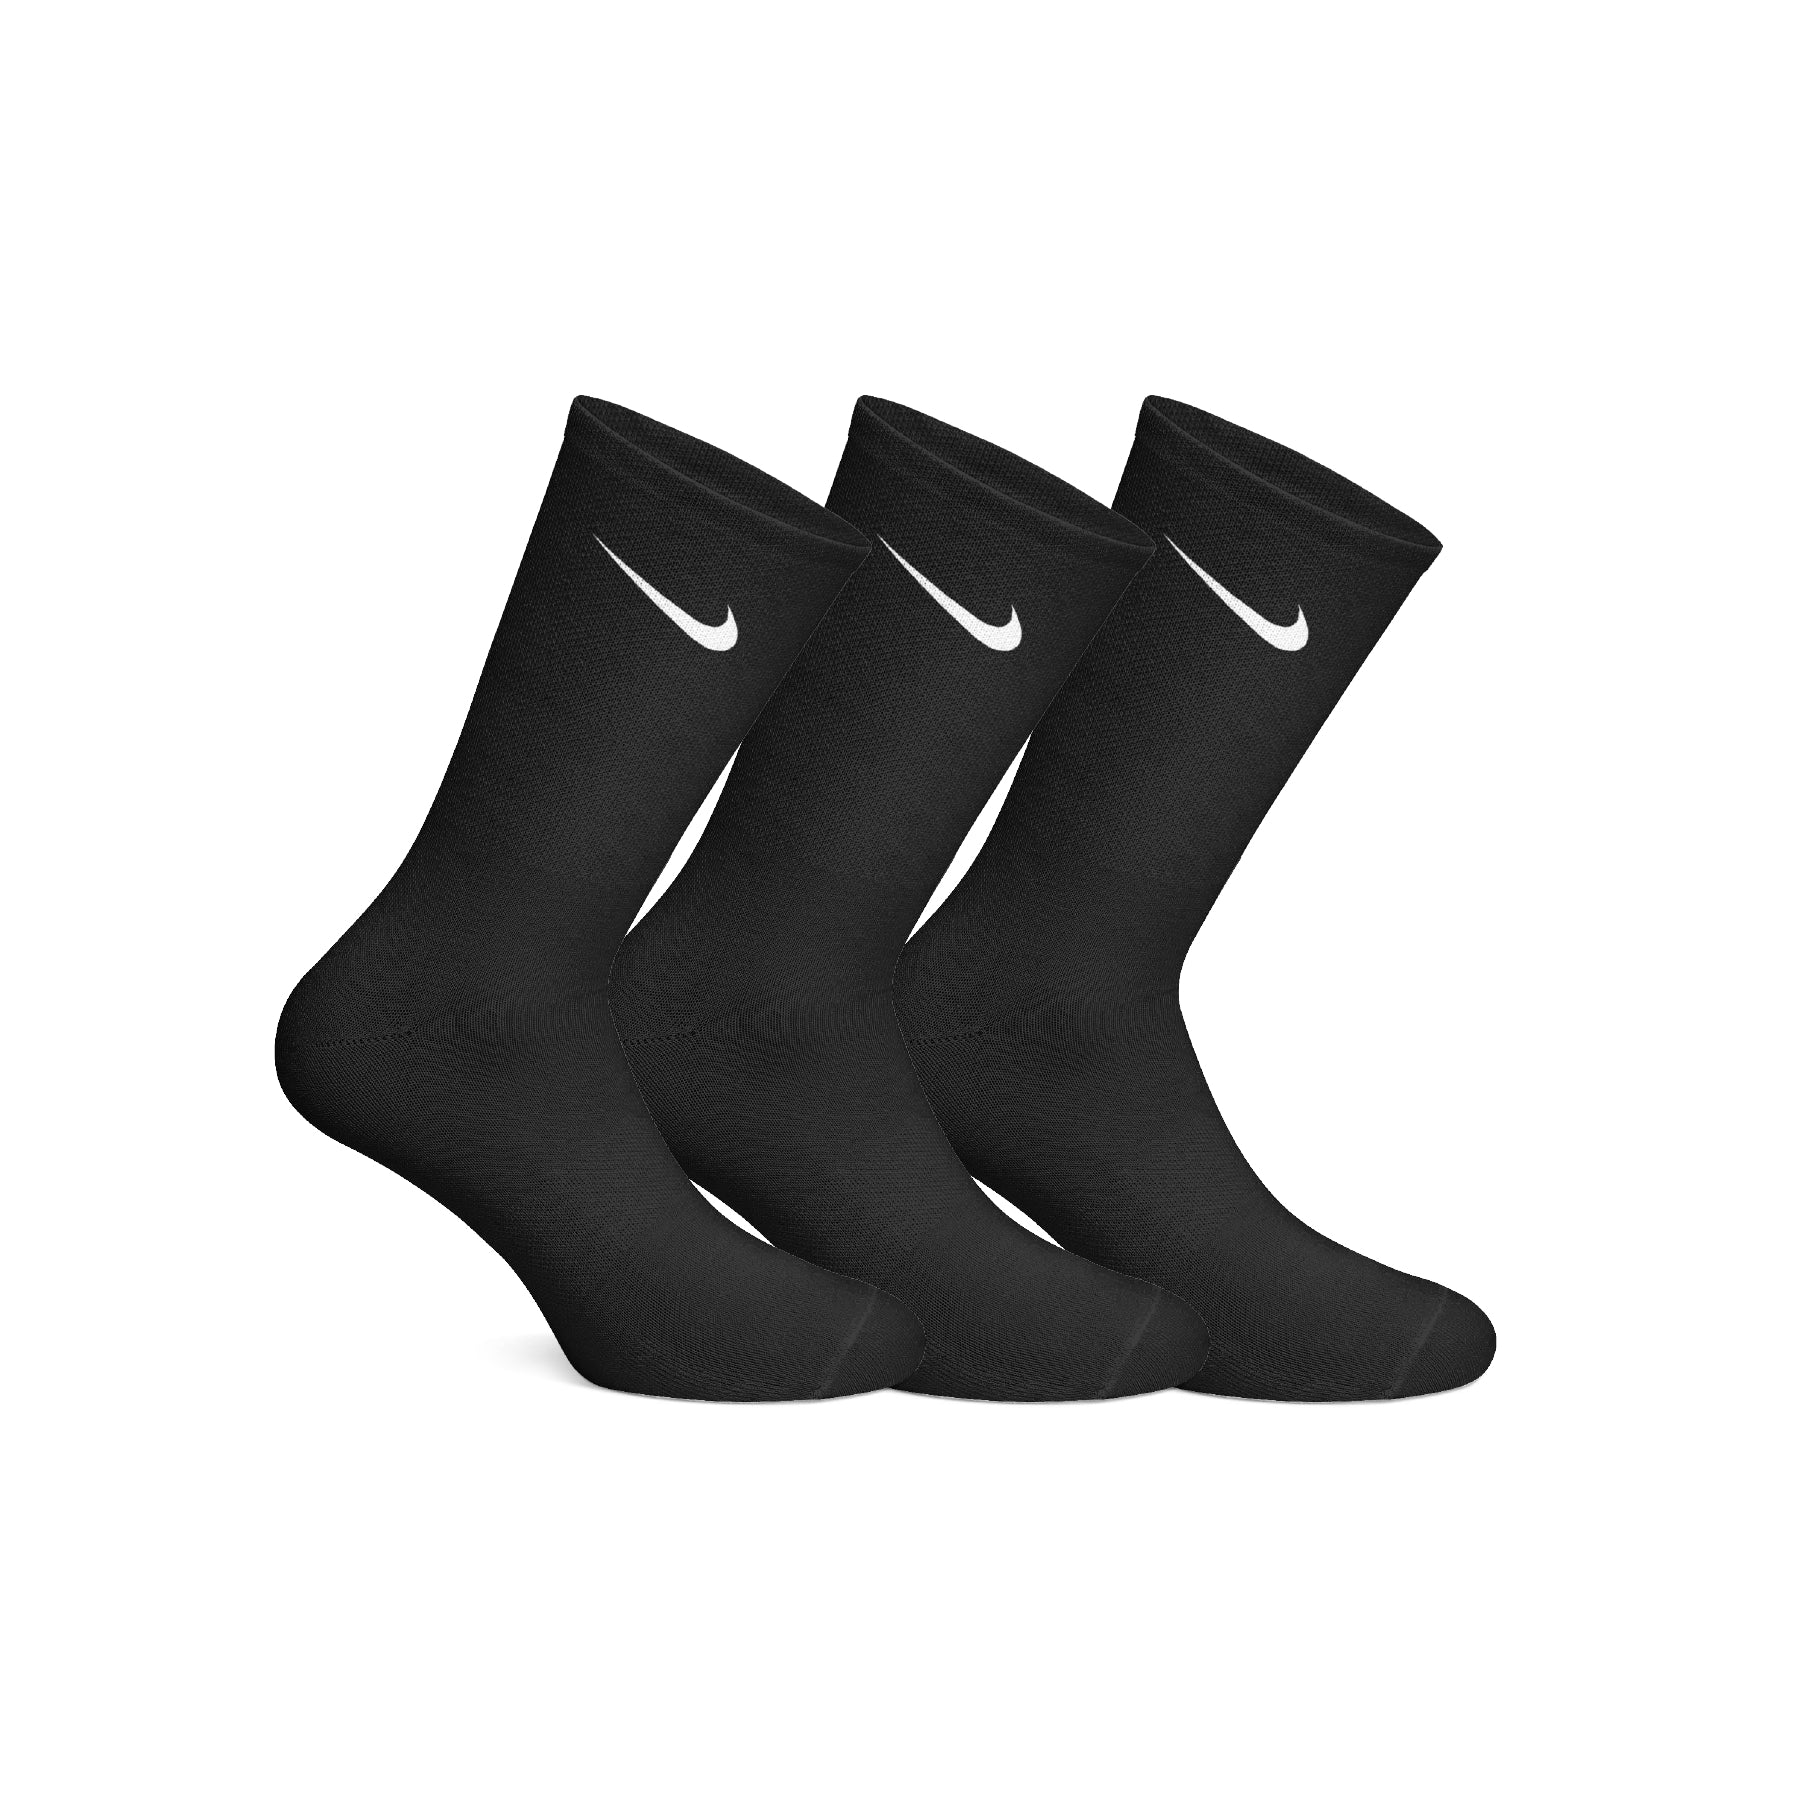 Nike black 3 pack socks